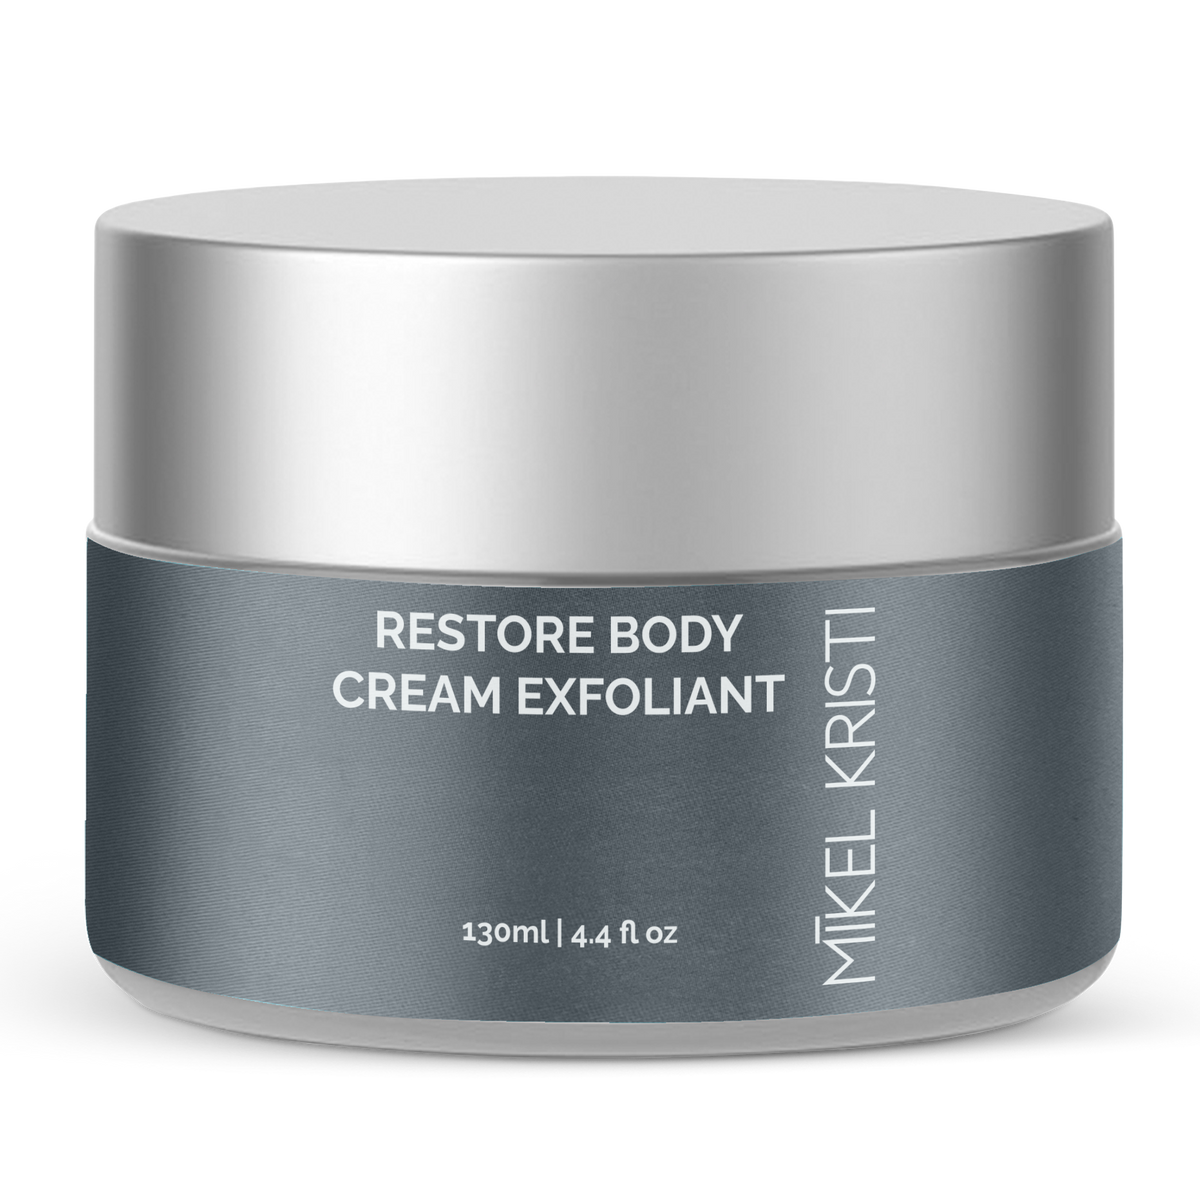 Restore Body Cream Exfoliant